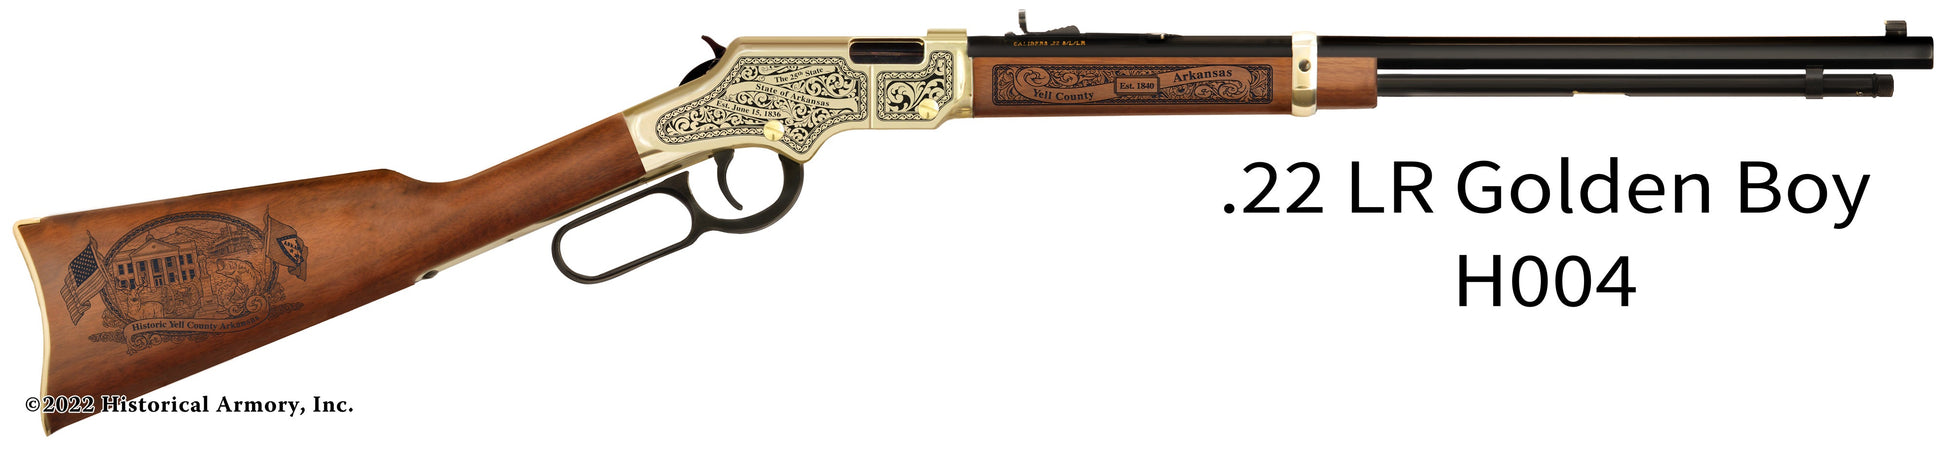 Yell County Arkansas Engraved Henry Golden Boy Rifle